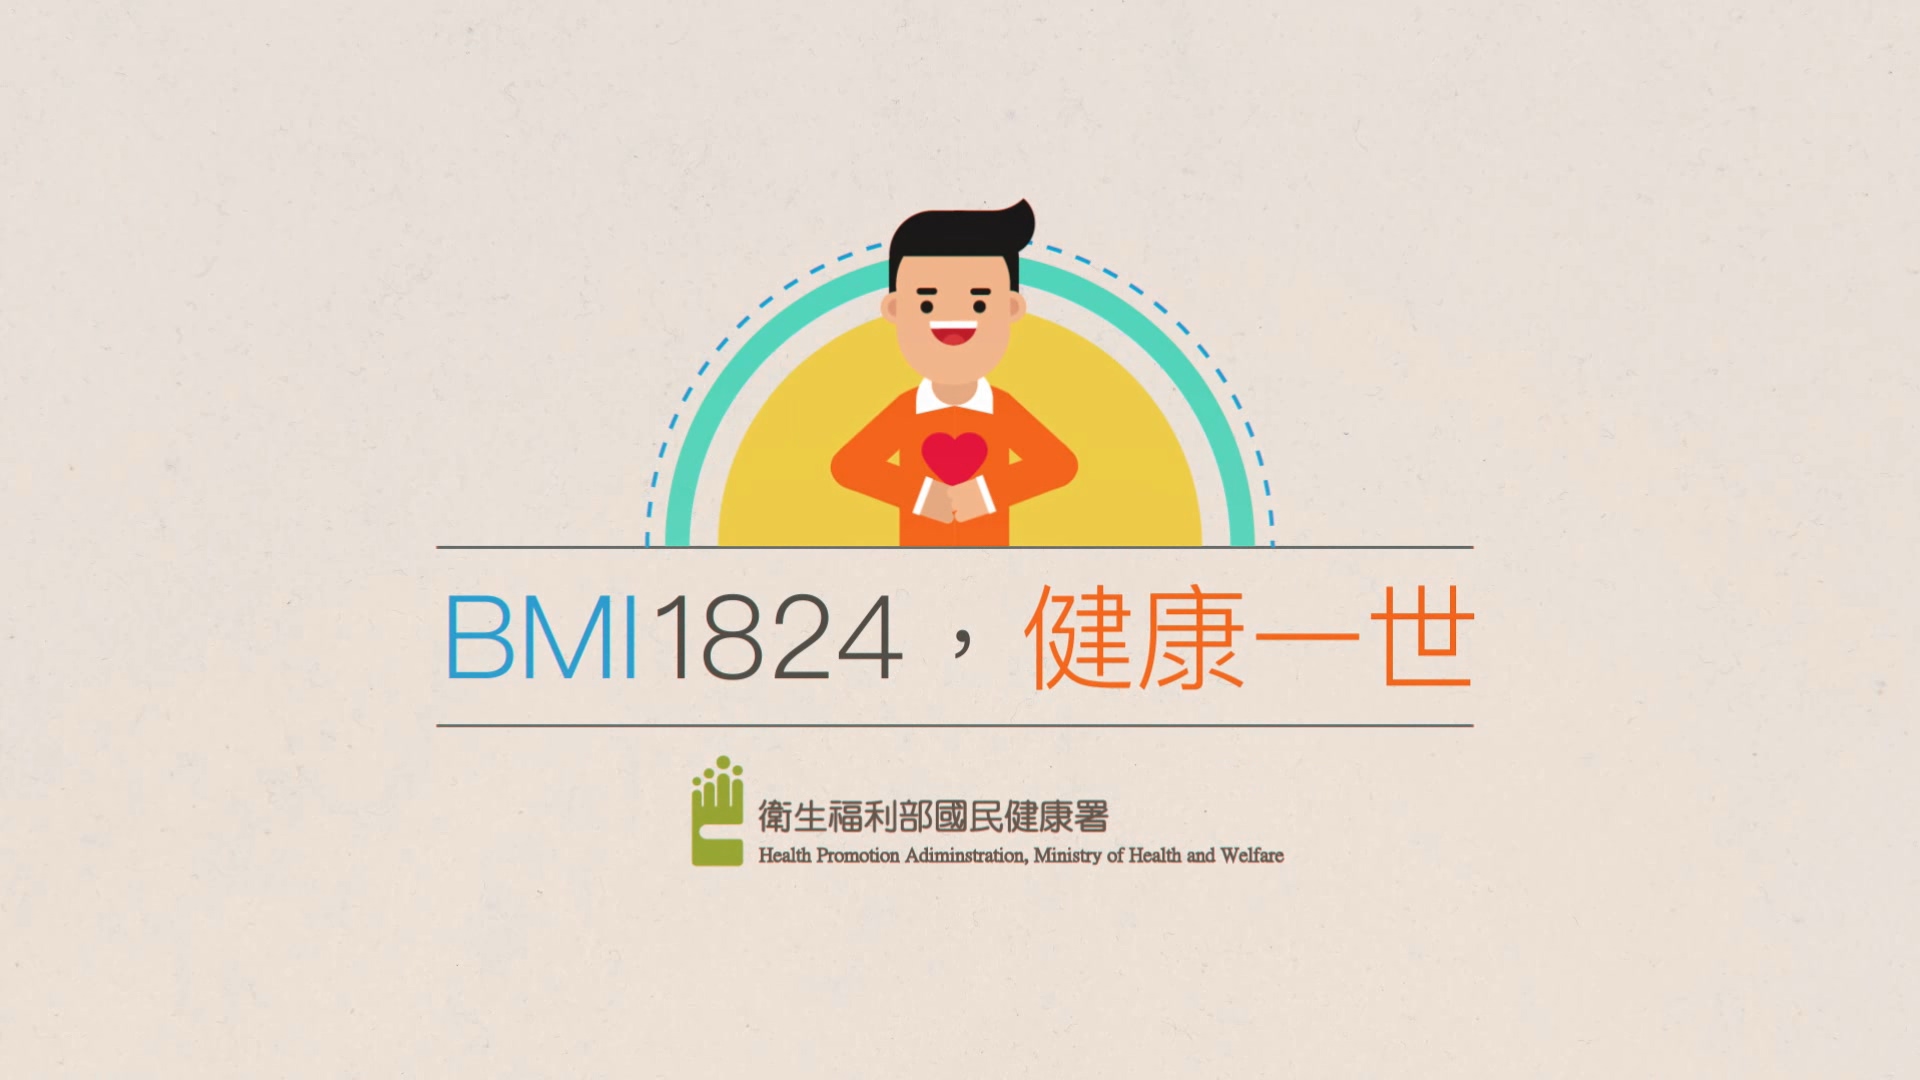 BMI 1824，健康一世文章照片